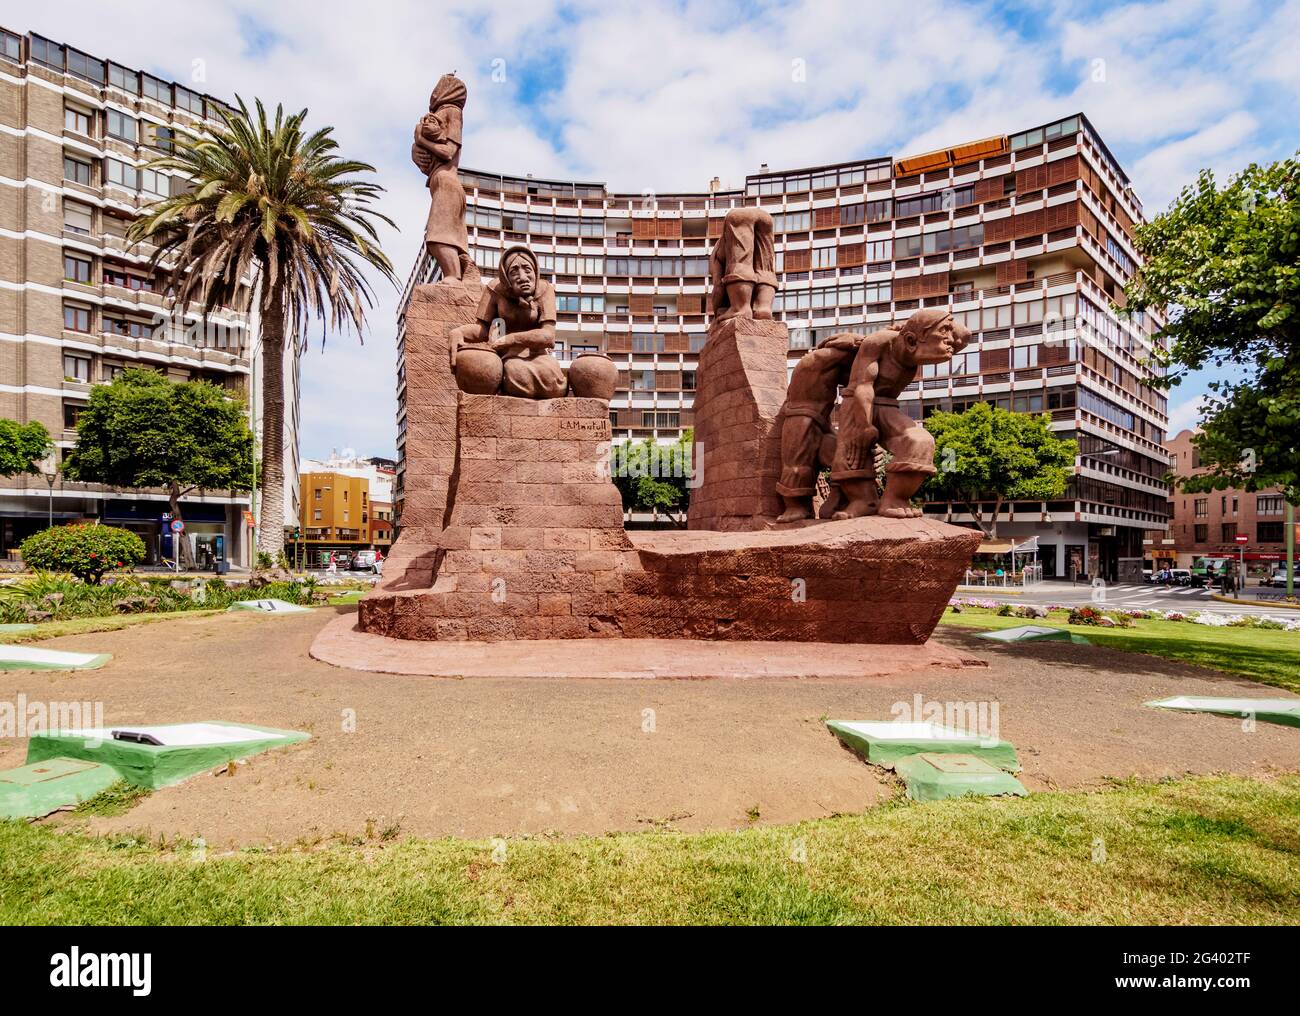 Monument at Plaza de Espana, Las Palmas de Gran Canaria, Gran Canaria,  Canary Islands, Spain Stock Photo - Alamy